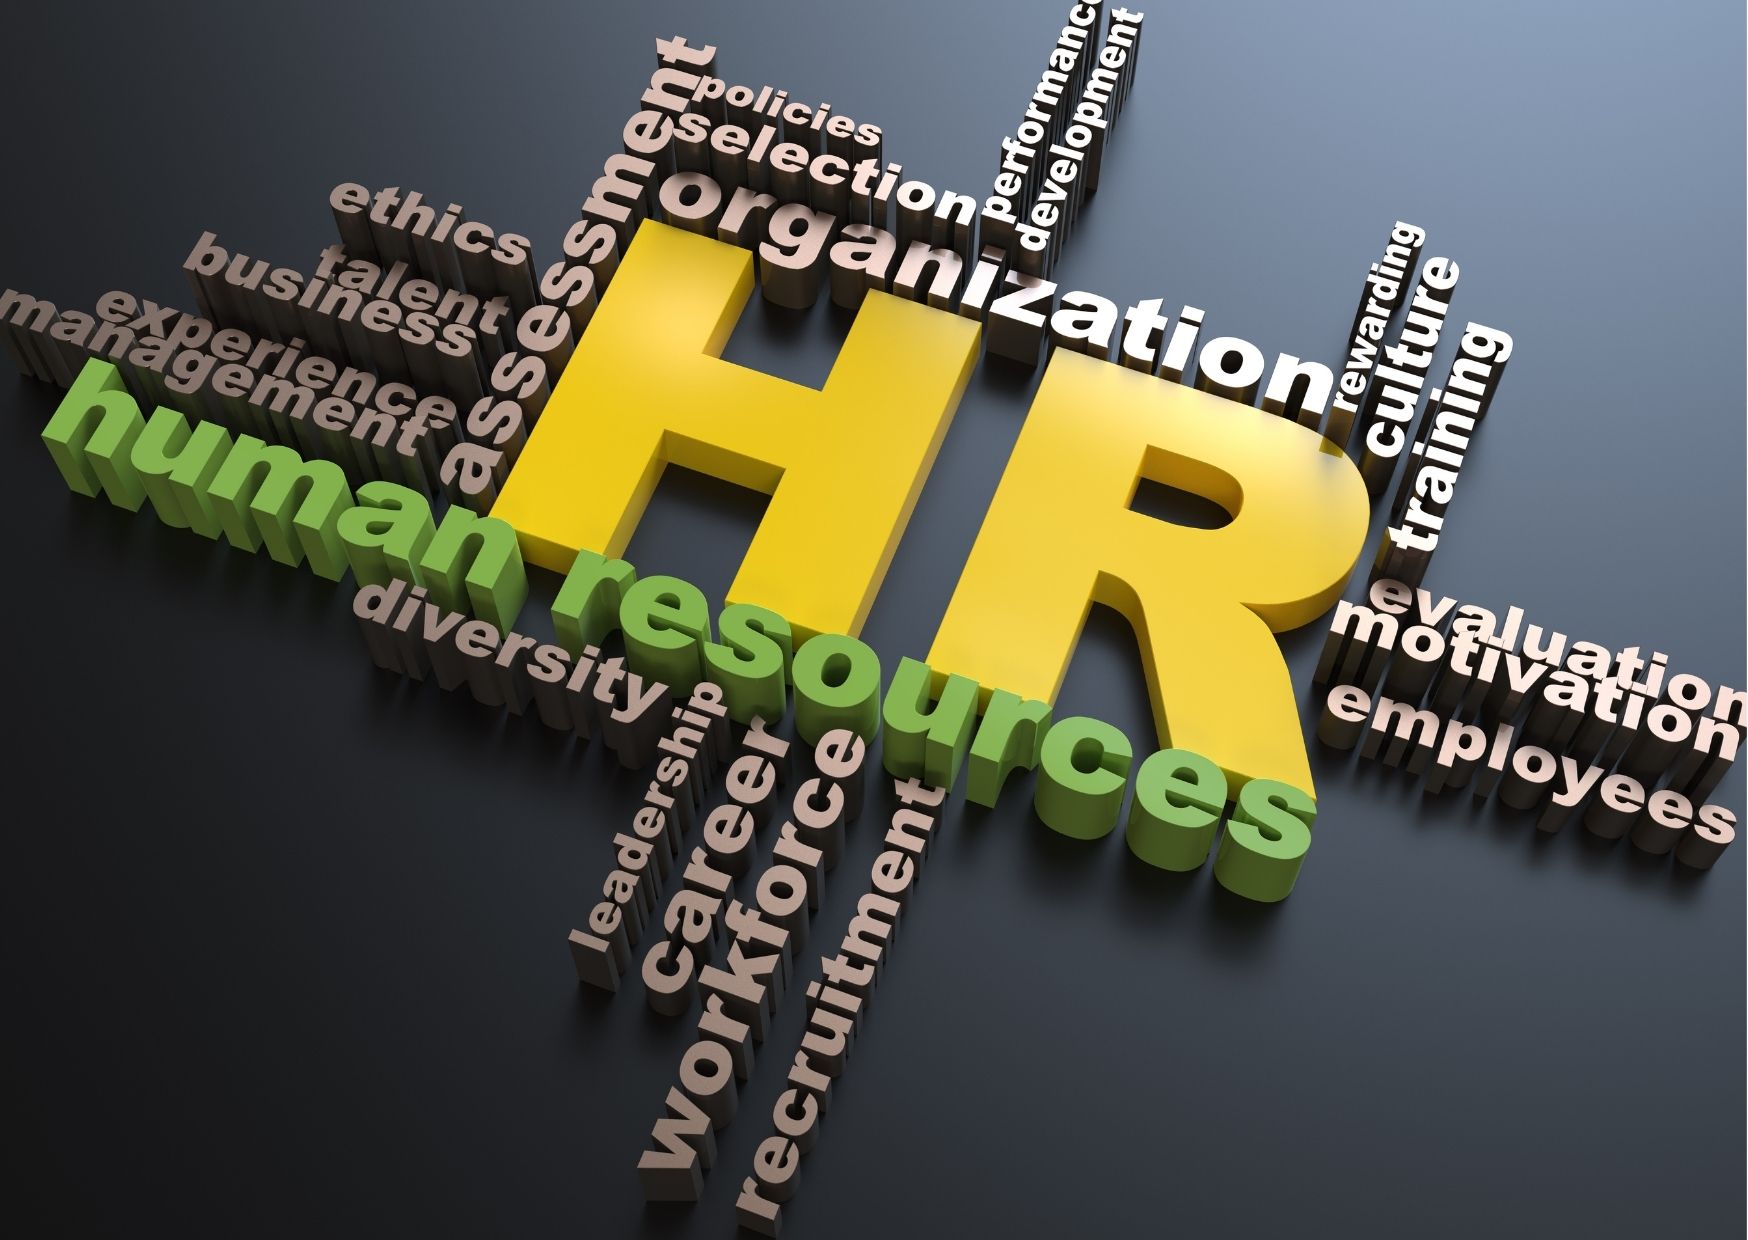 resource management